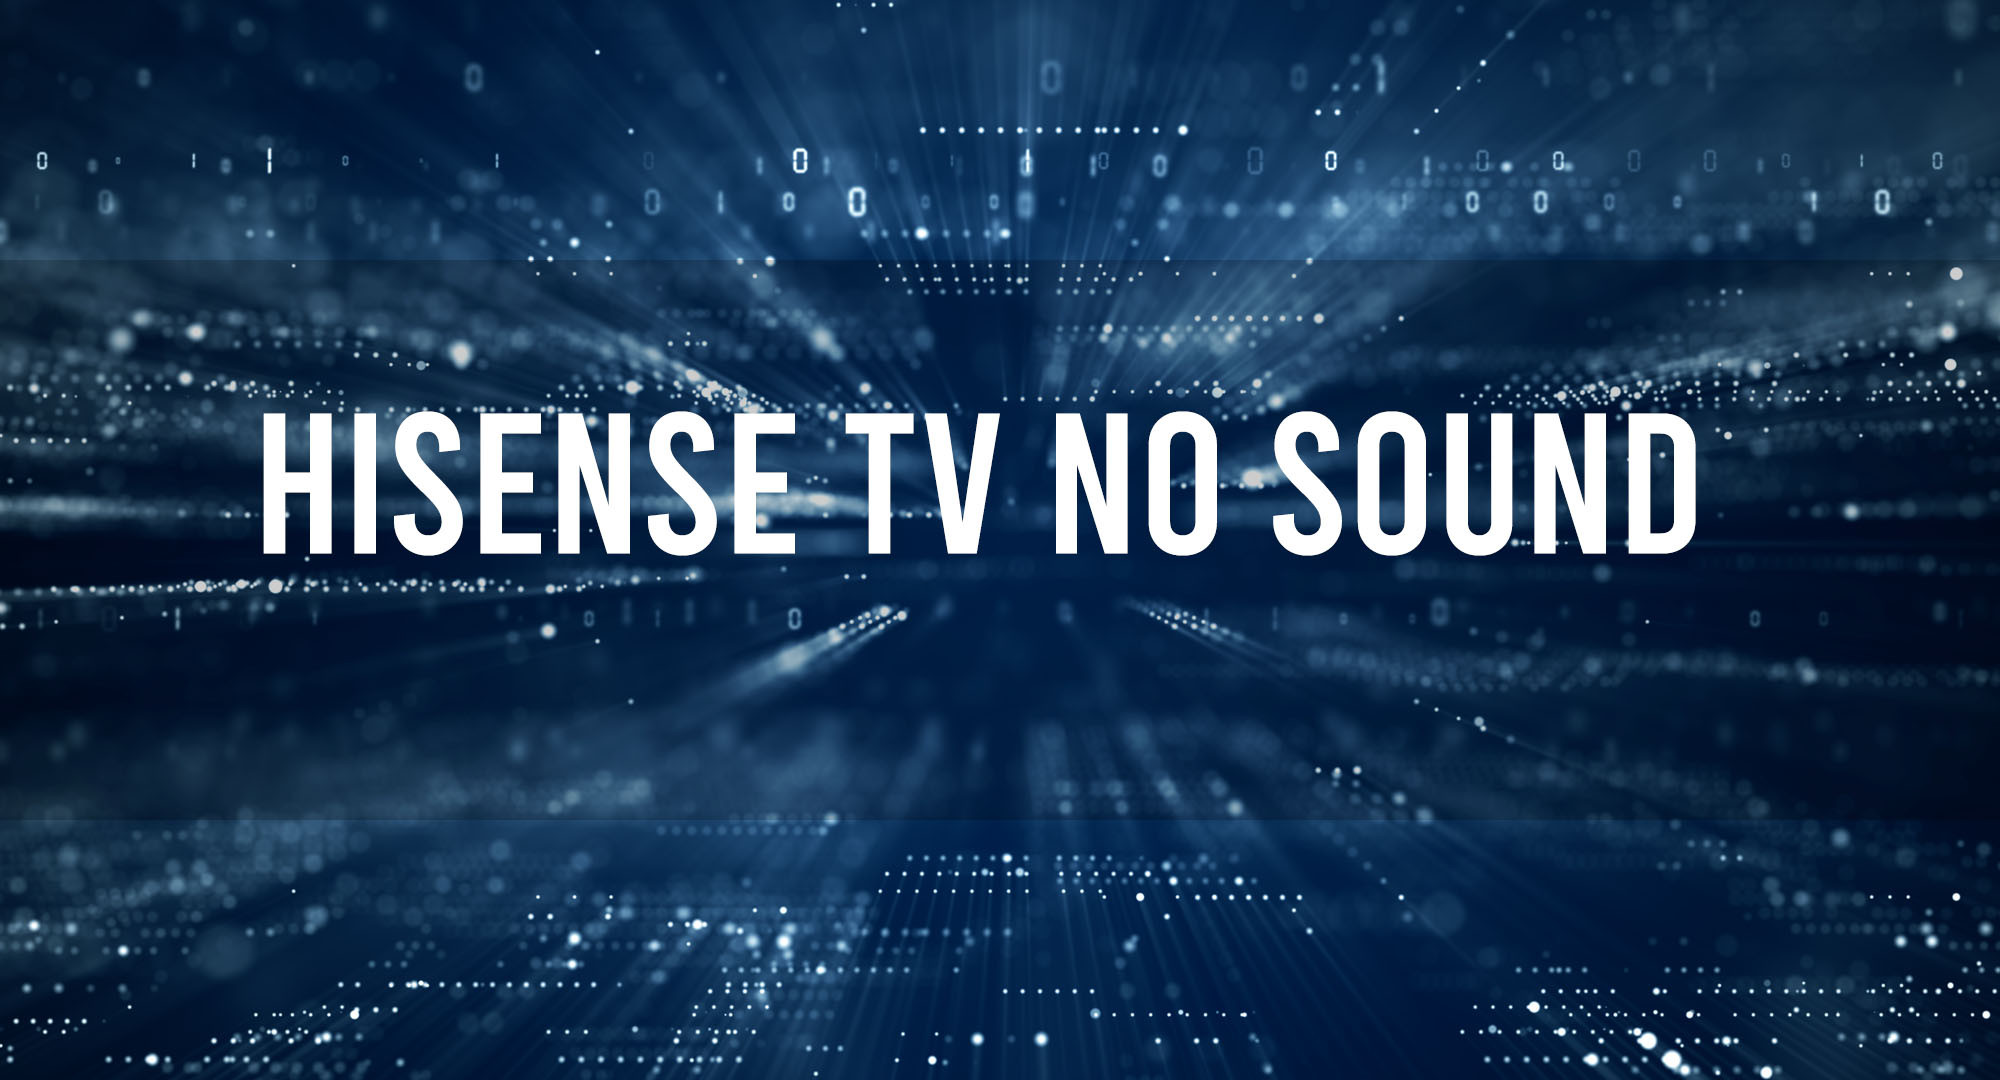 Hisense TV No Sound